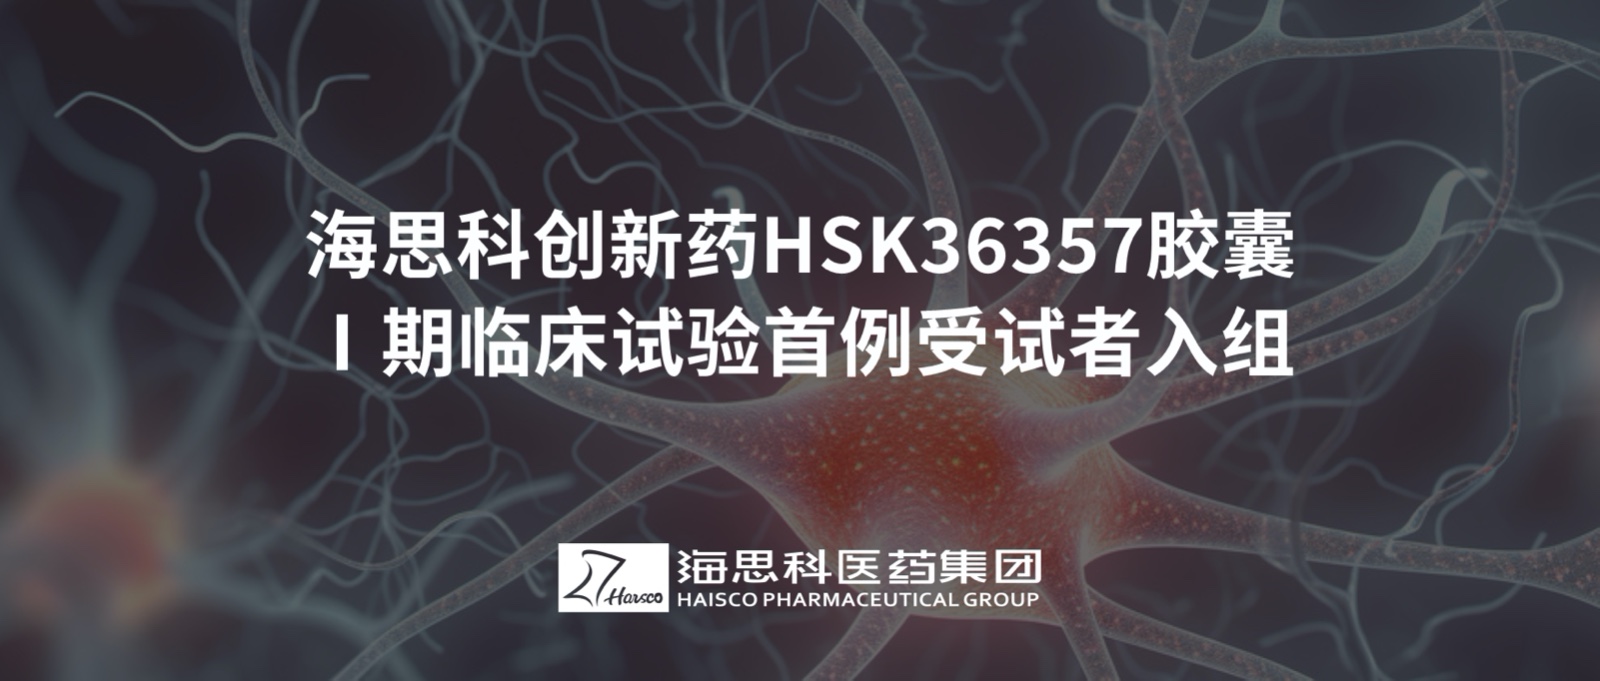 AG官方登录入口創新藥HSK36357膠囊Ⅰ期臨床試驗首例受試者入組